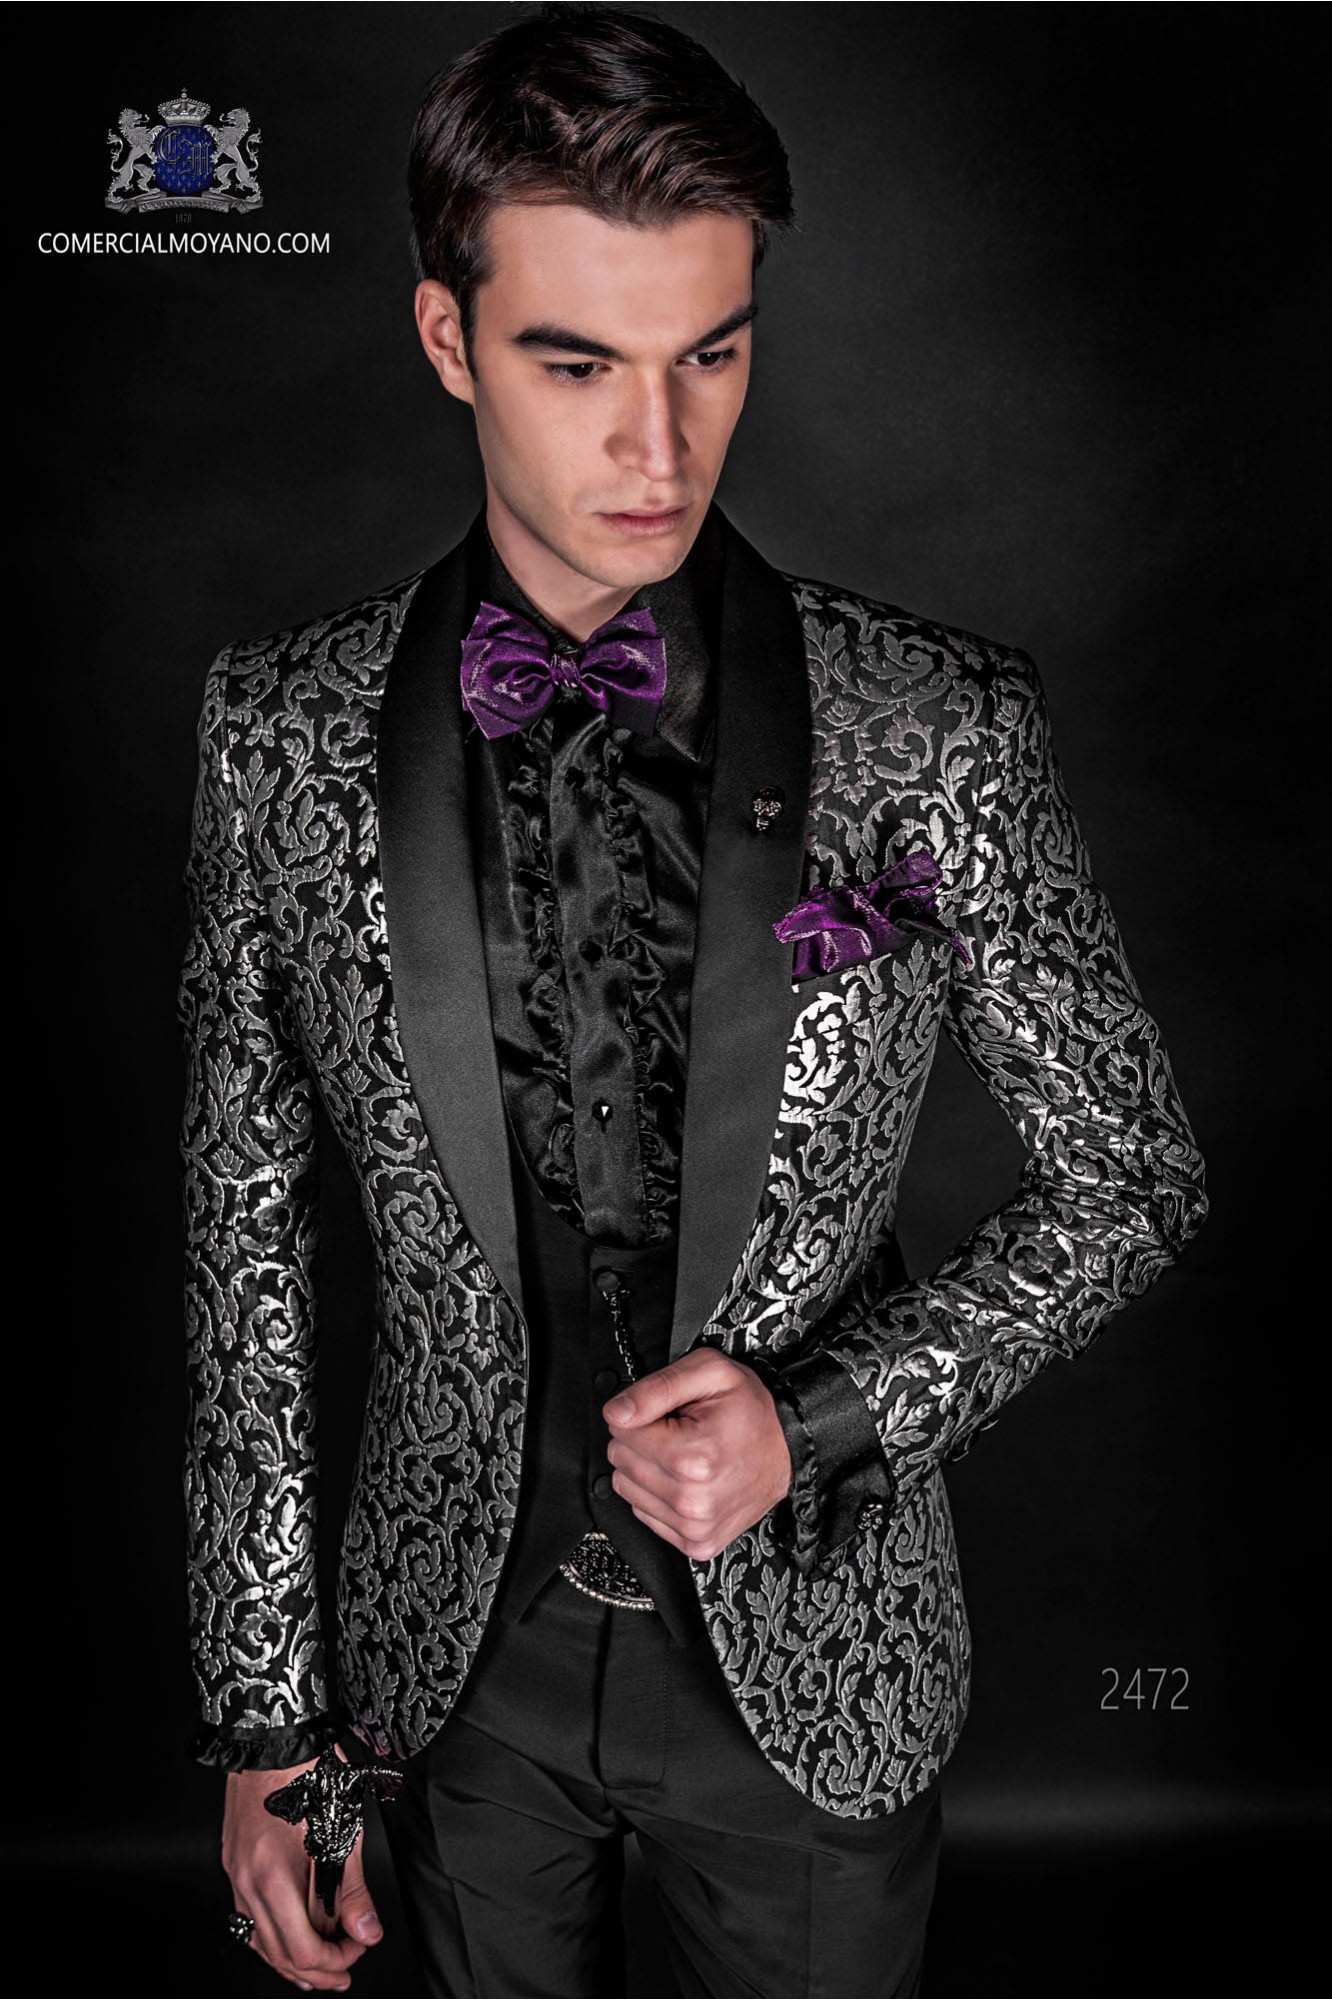 Korean fashion gothic jacket brocade black and silver. model 2472 Mario Moyano